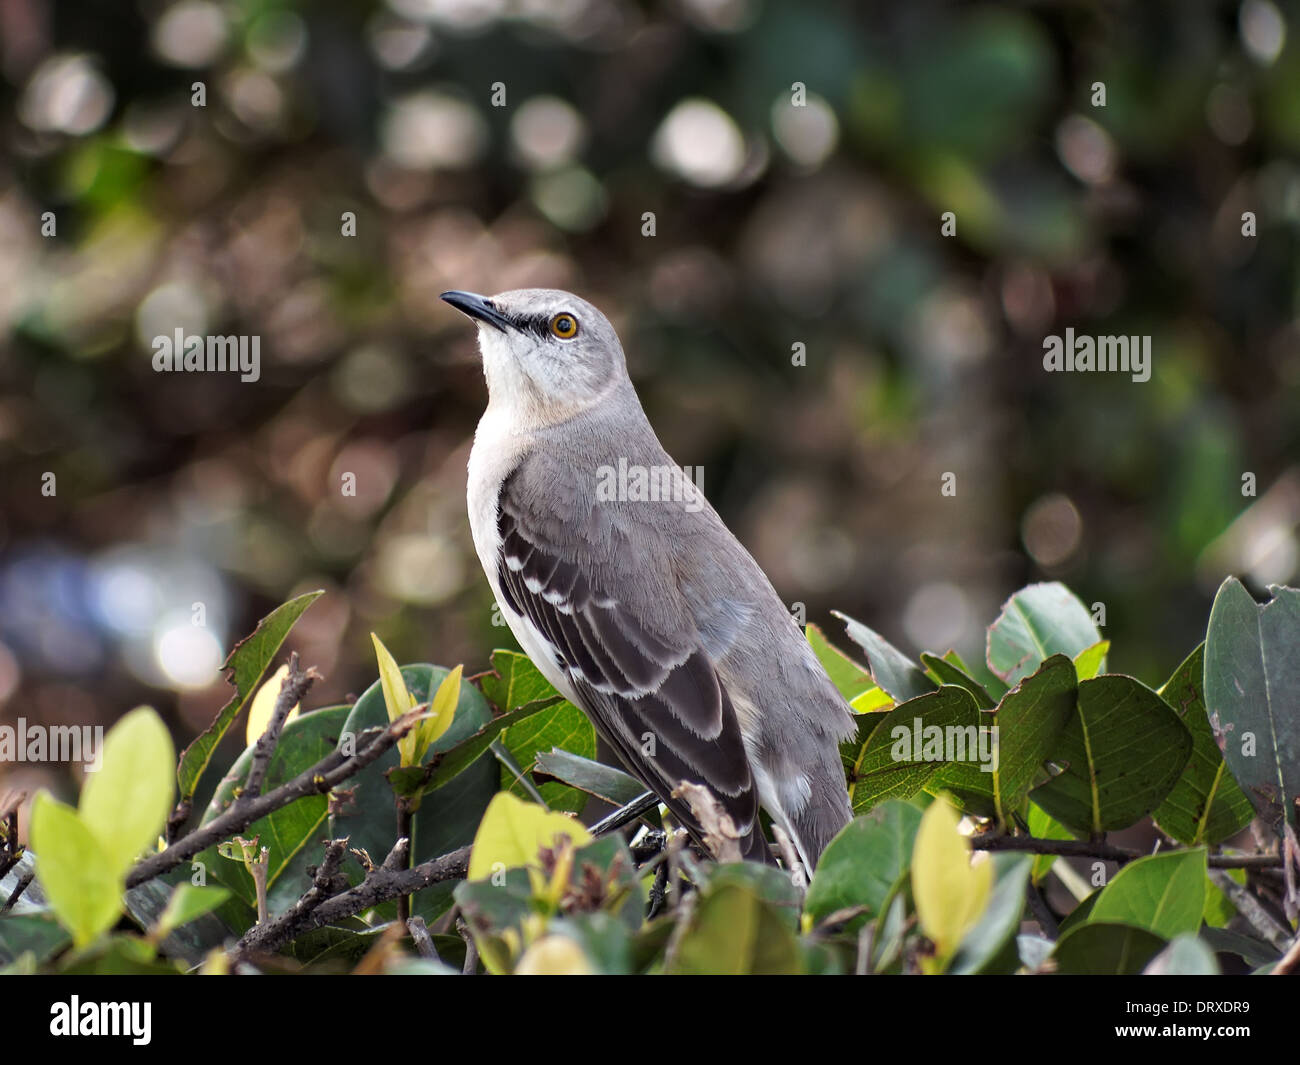 Northern Mockingbird in profile, looking up. Stock Photo